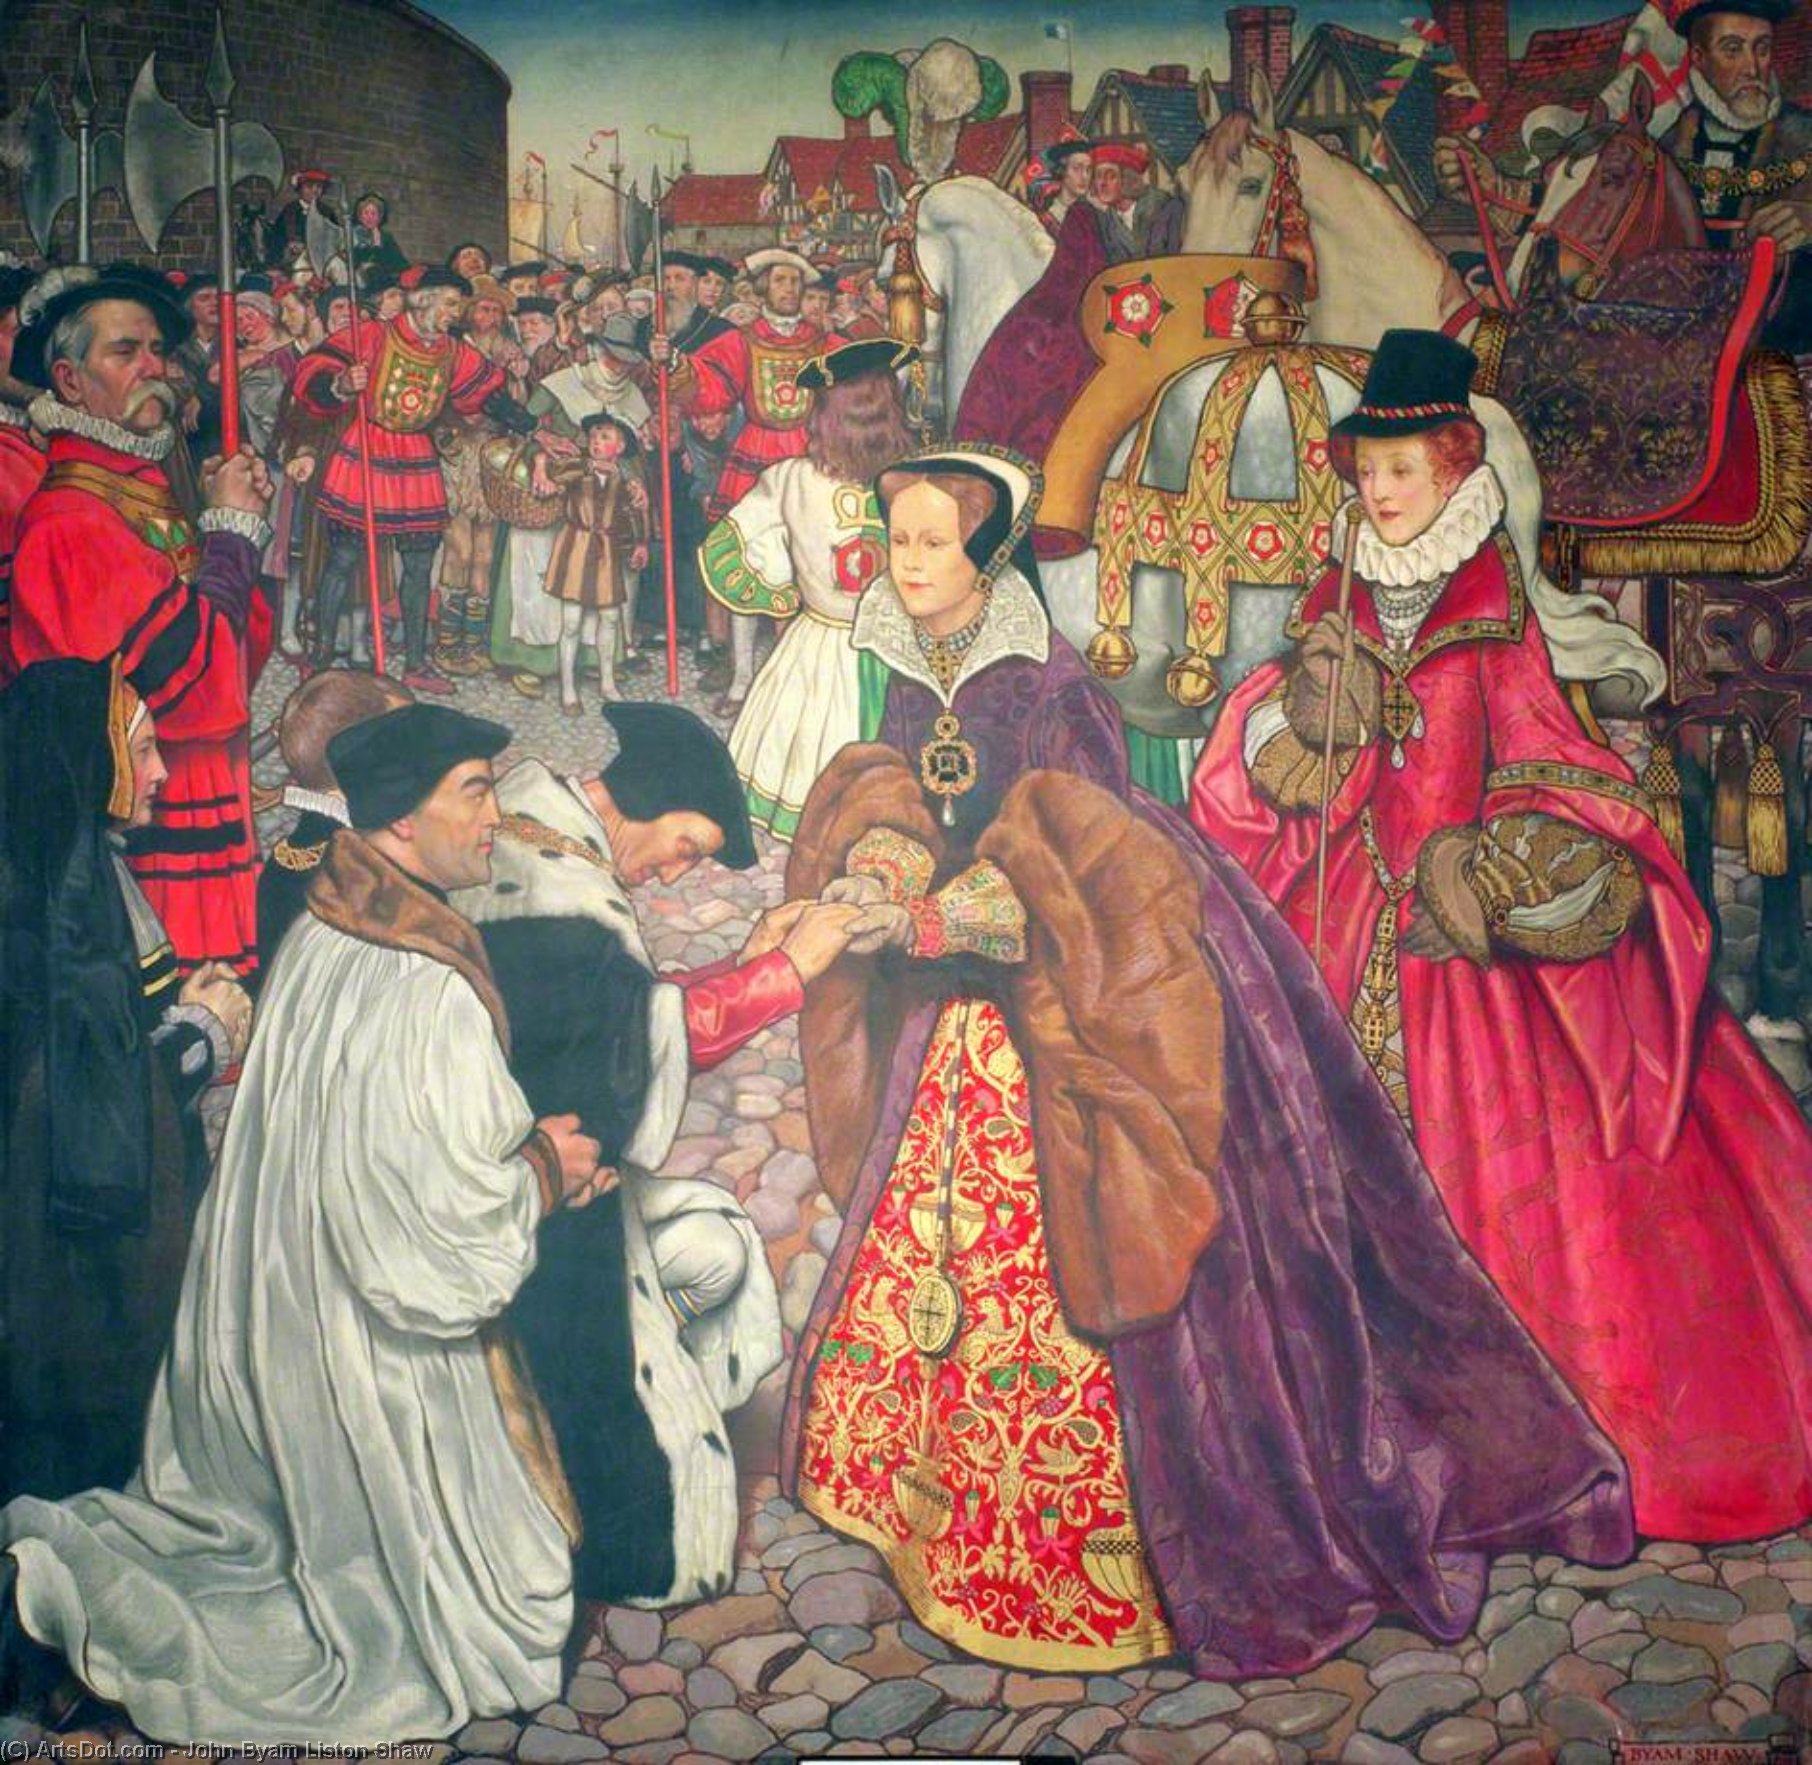 Buy Museum Art Reproductions The Entrance Of Mary I With Princess Elizabeth Into London by John Byam Liston Shaw (1872-1919, India) | ArtsDot.com